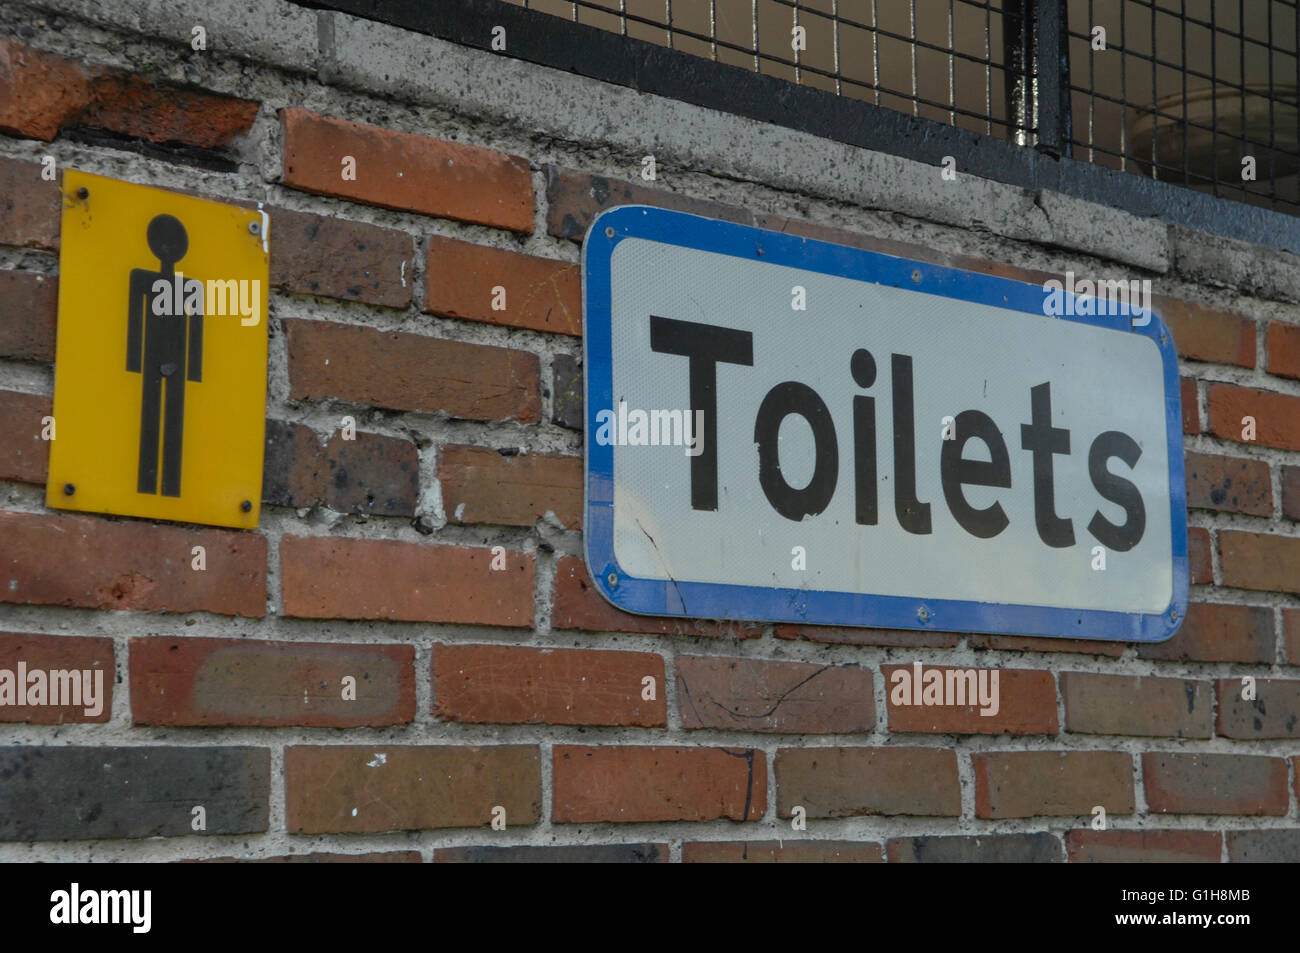 Toilet for men public sign Stock Photo